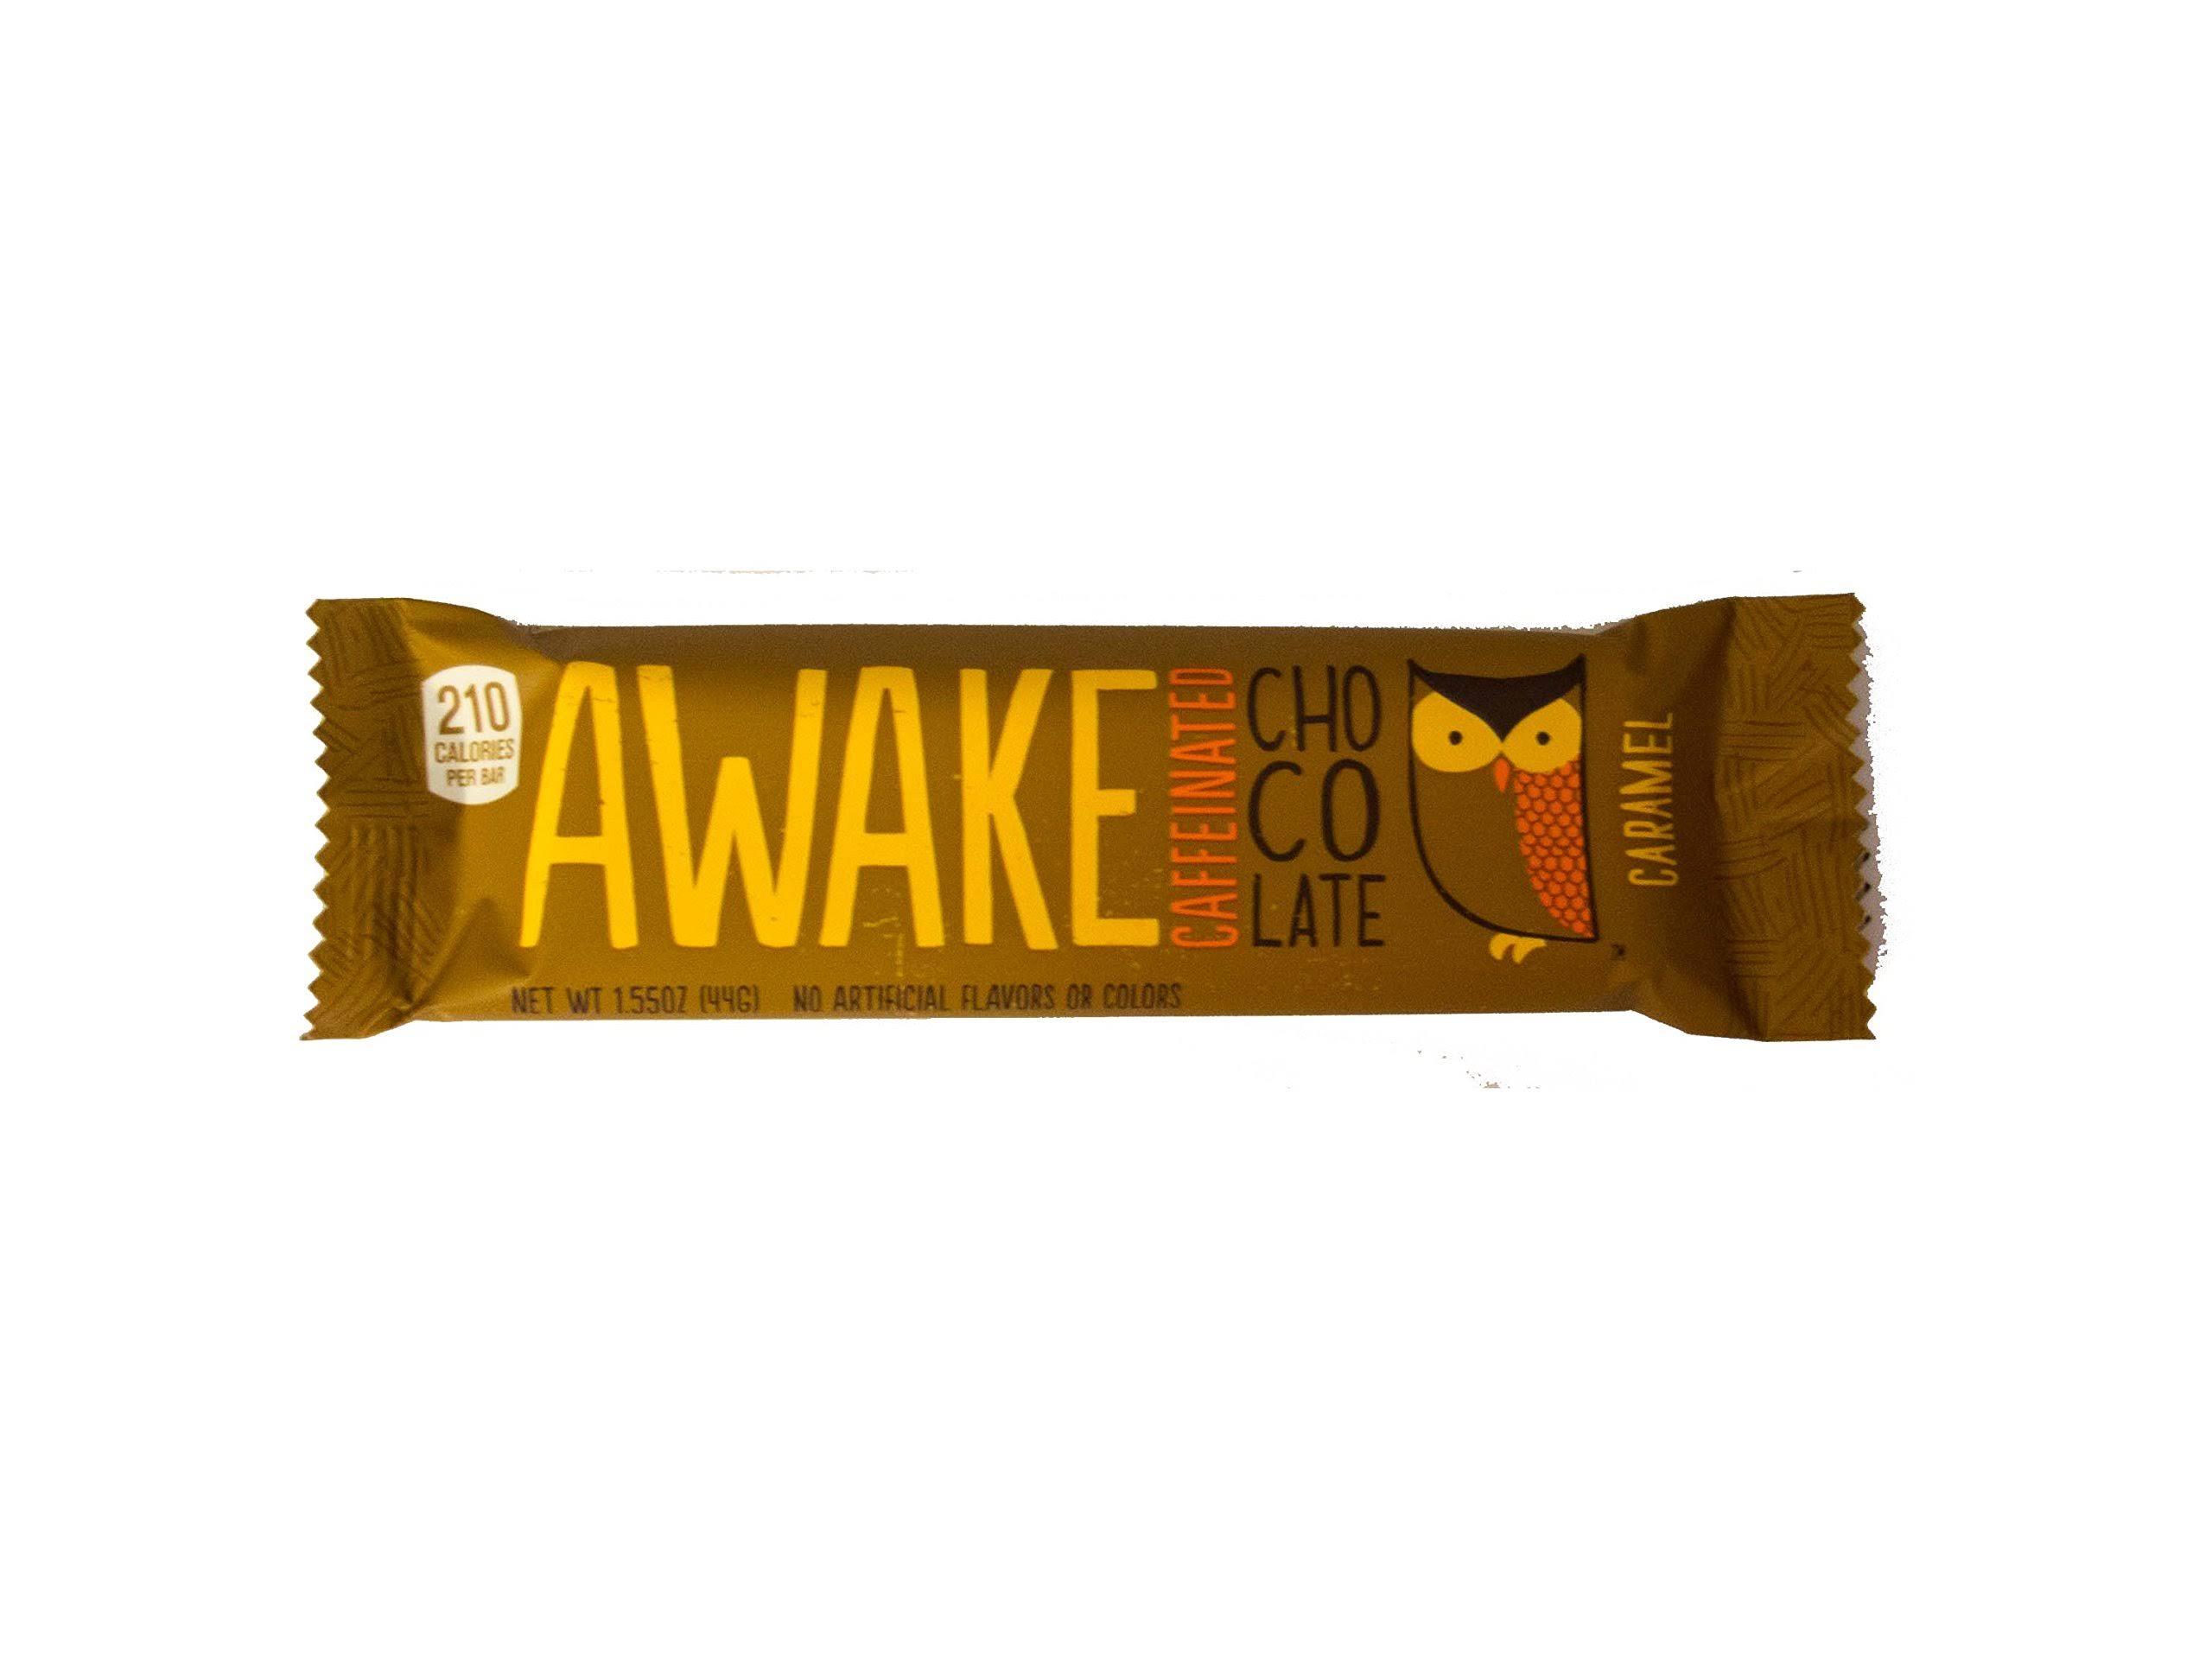 Awake Chocolate Caramel Candy Bar - 1.55oz